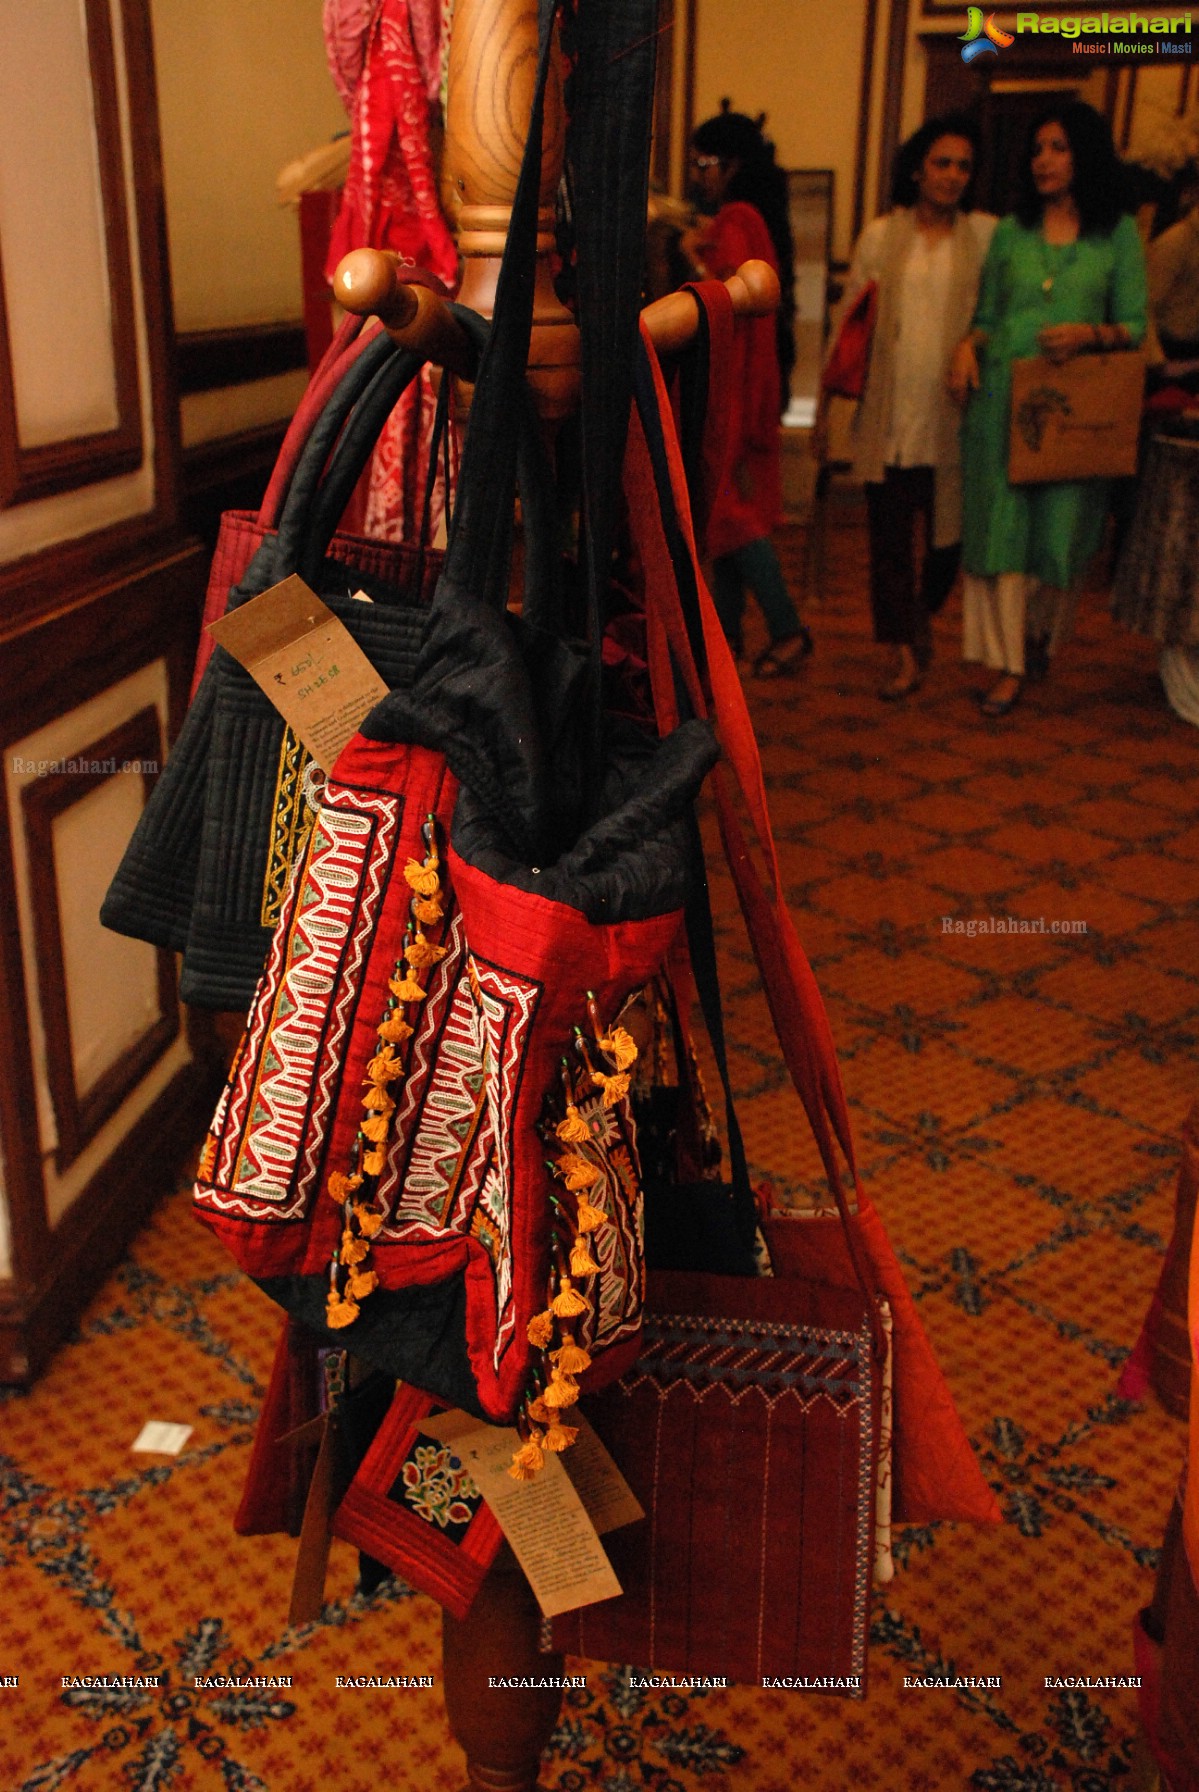 Varreniyam celebrating Artisans and Craftsmen at Taj Deccan, Hyderabad